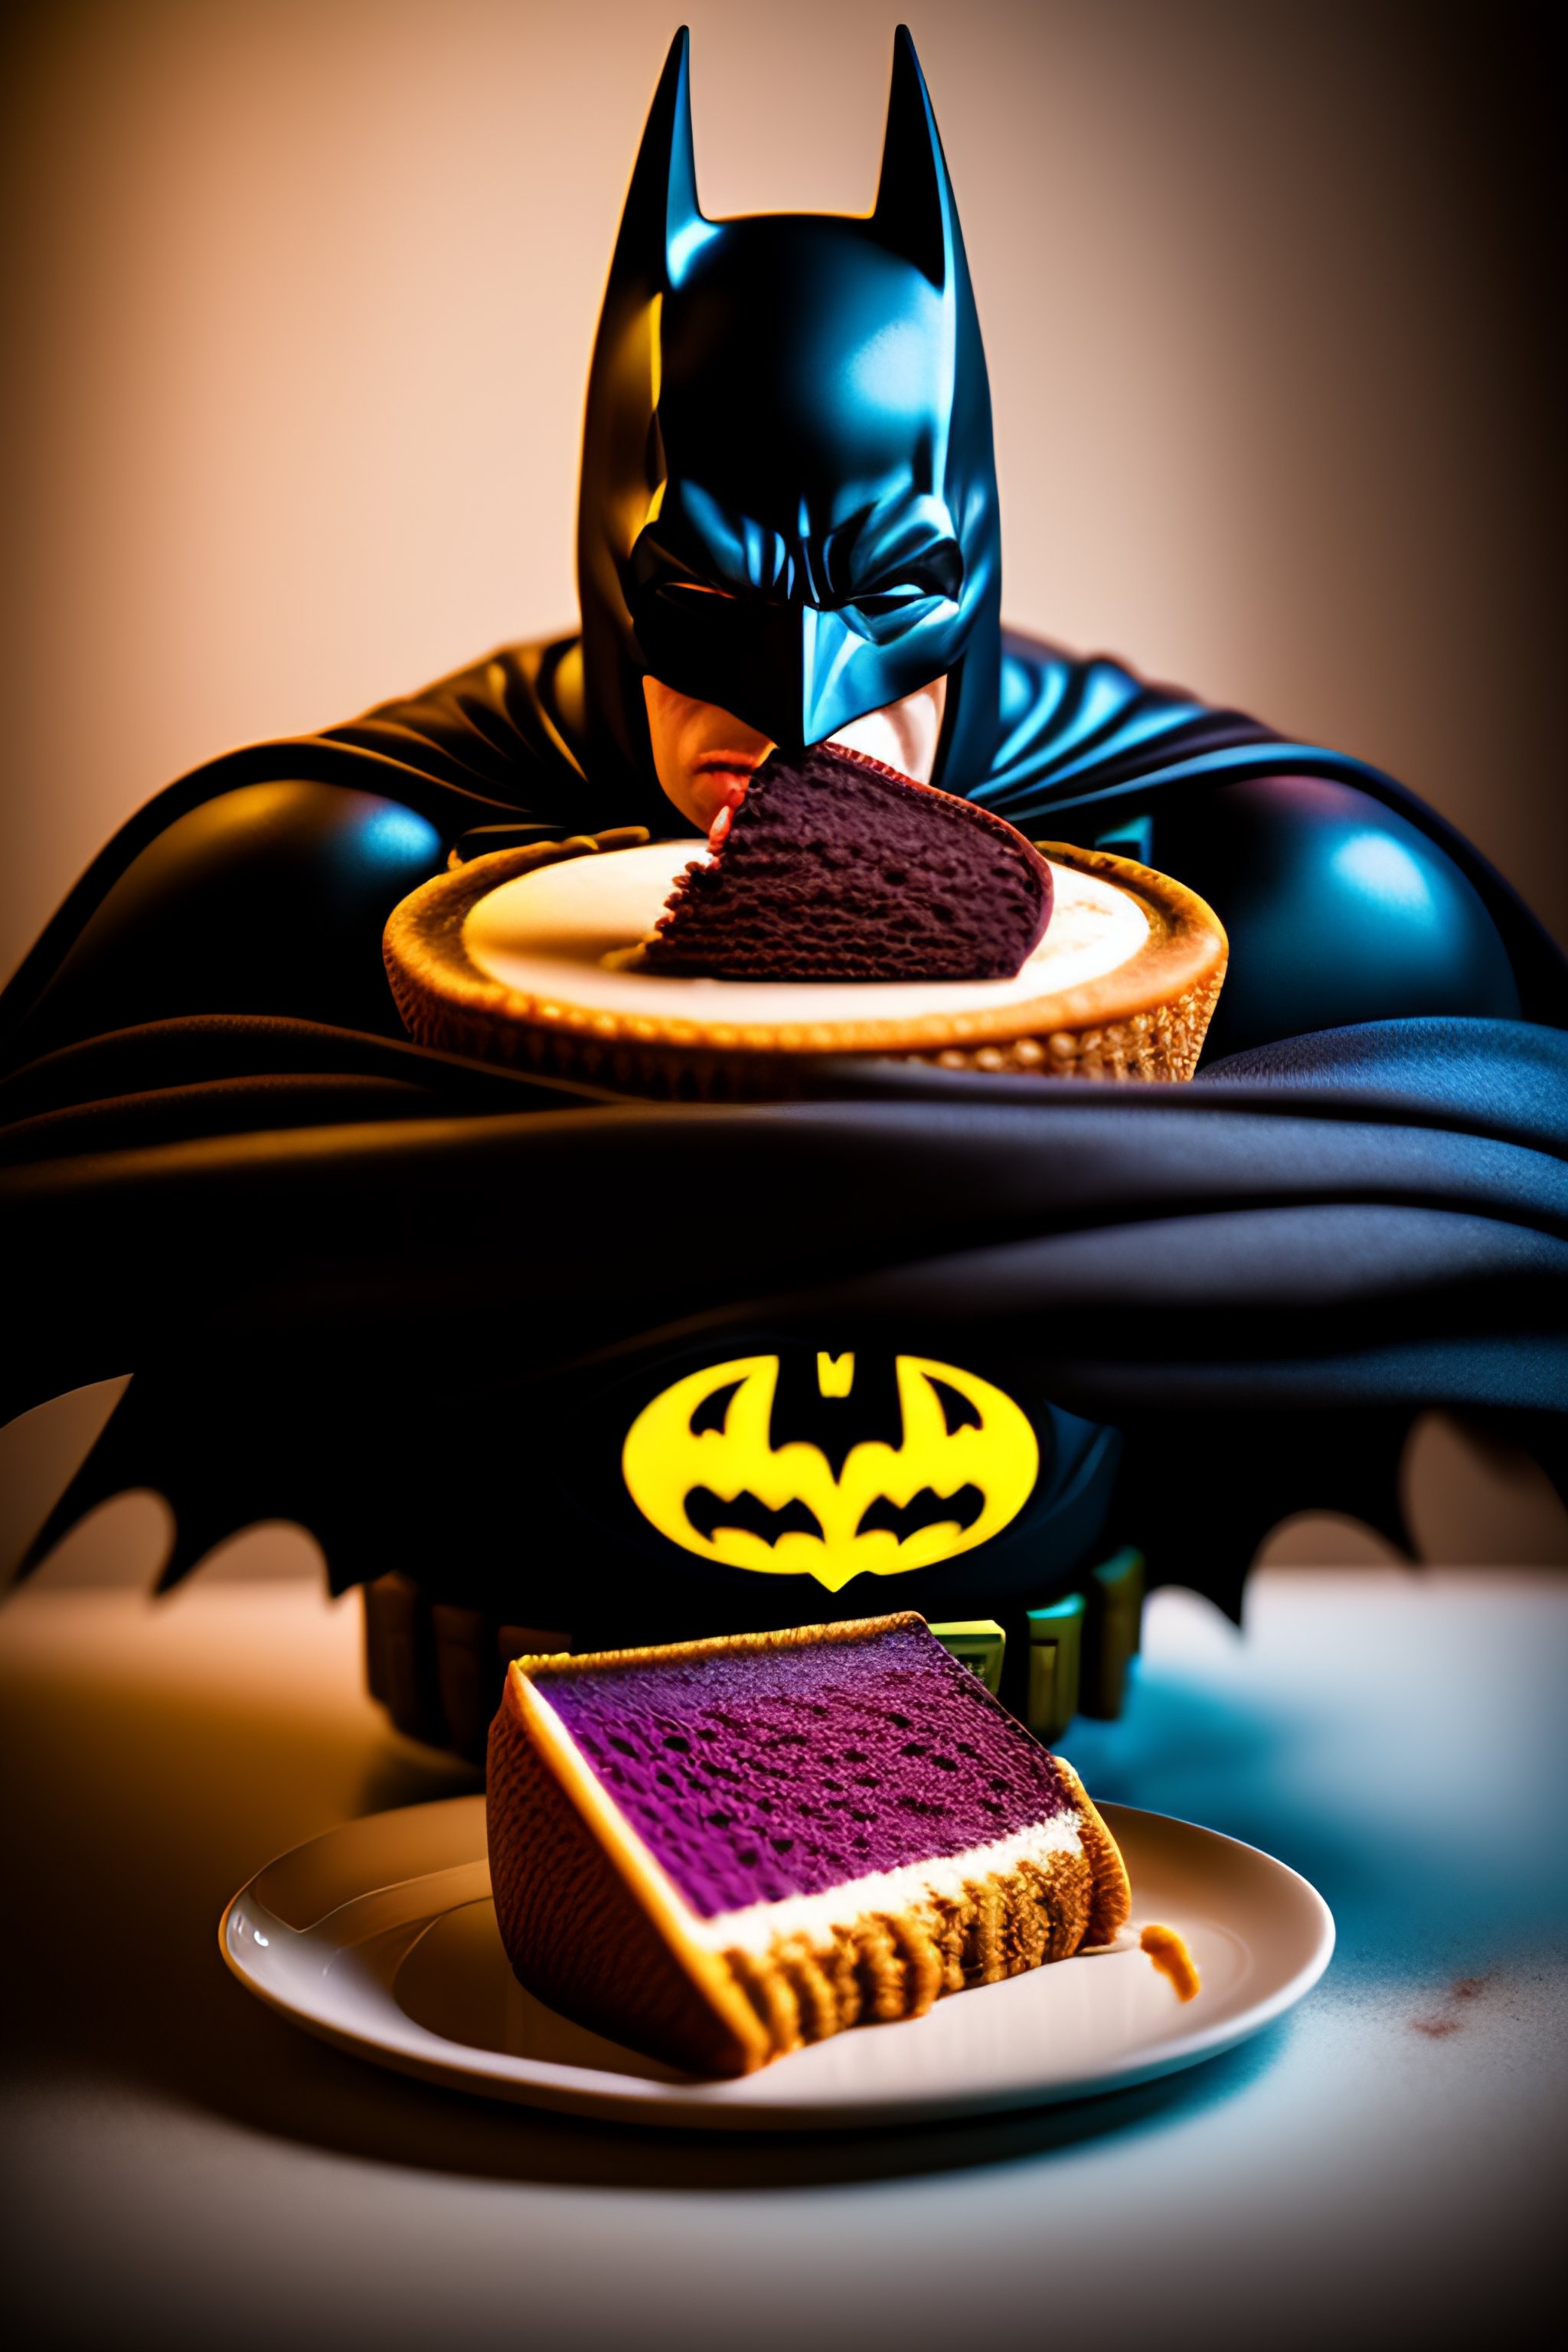 Lexica - Batman eating cake photo studio lighting